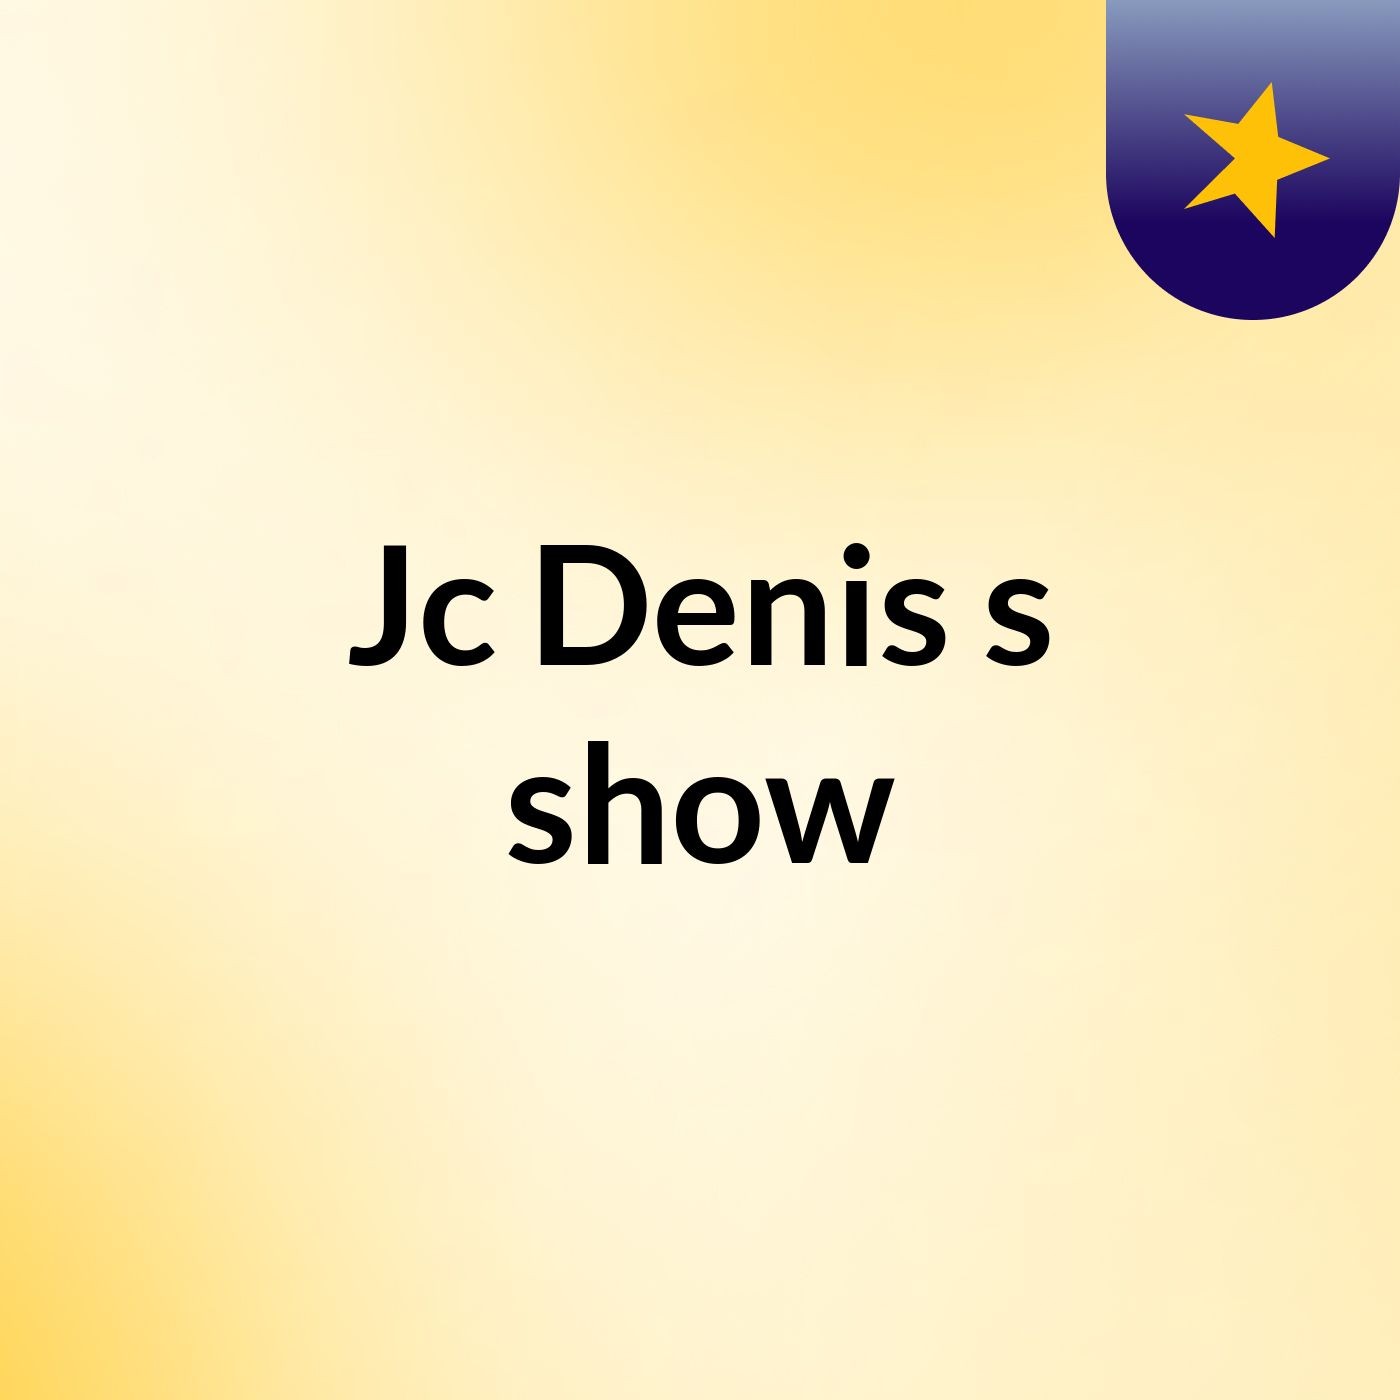 Jc Denis's show